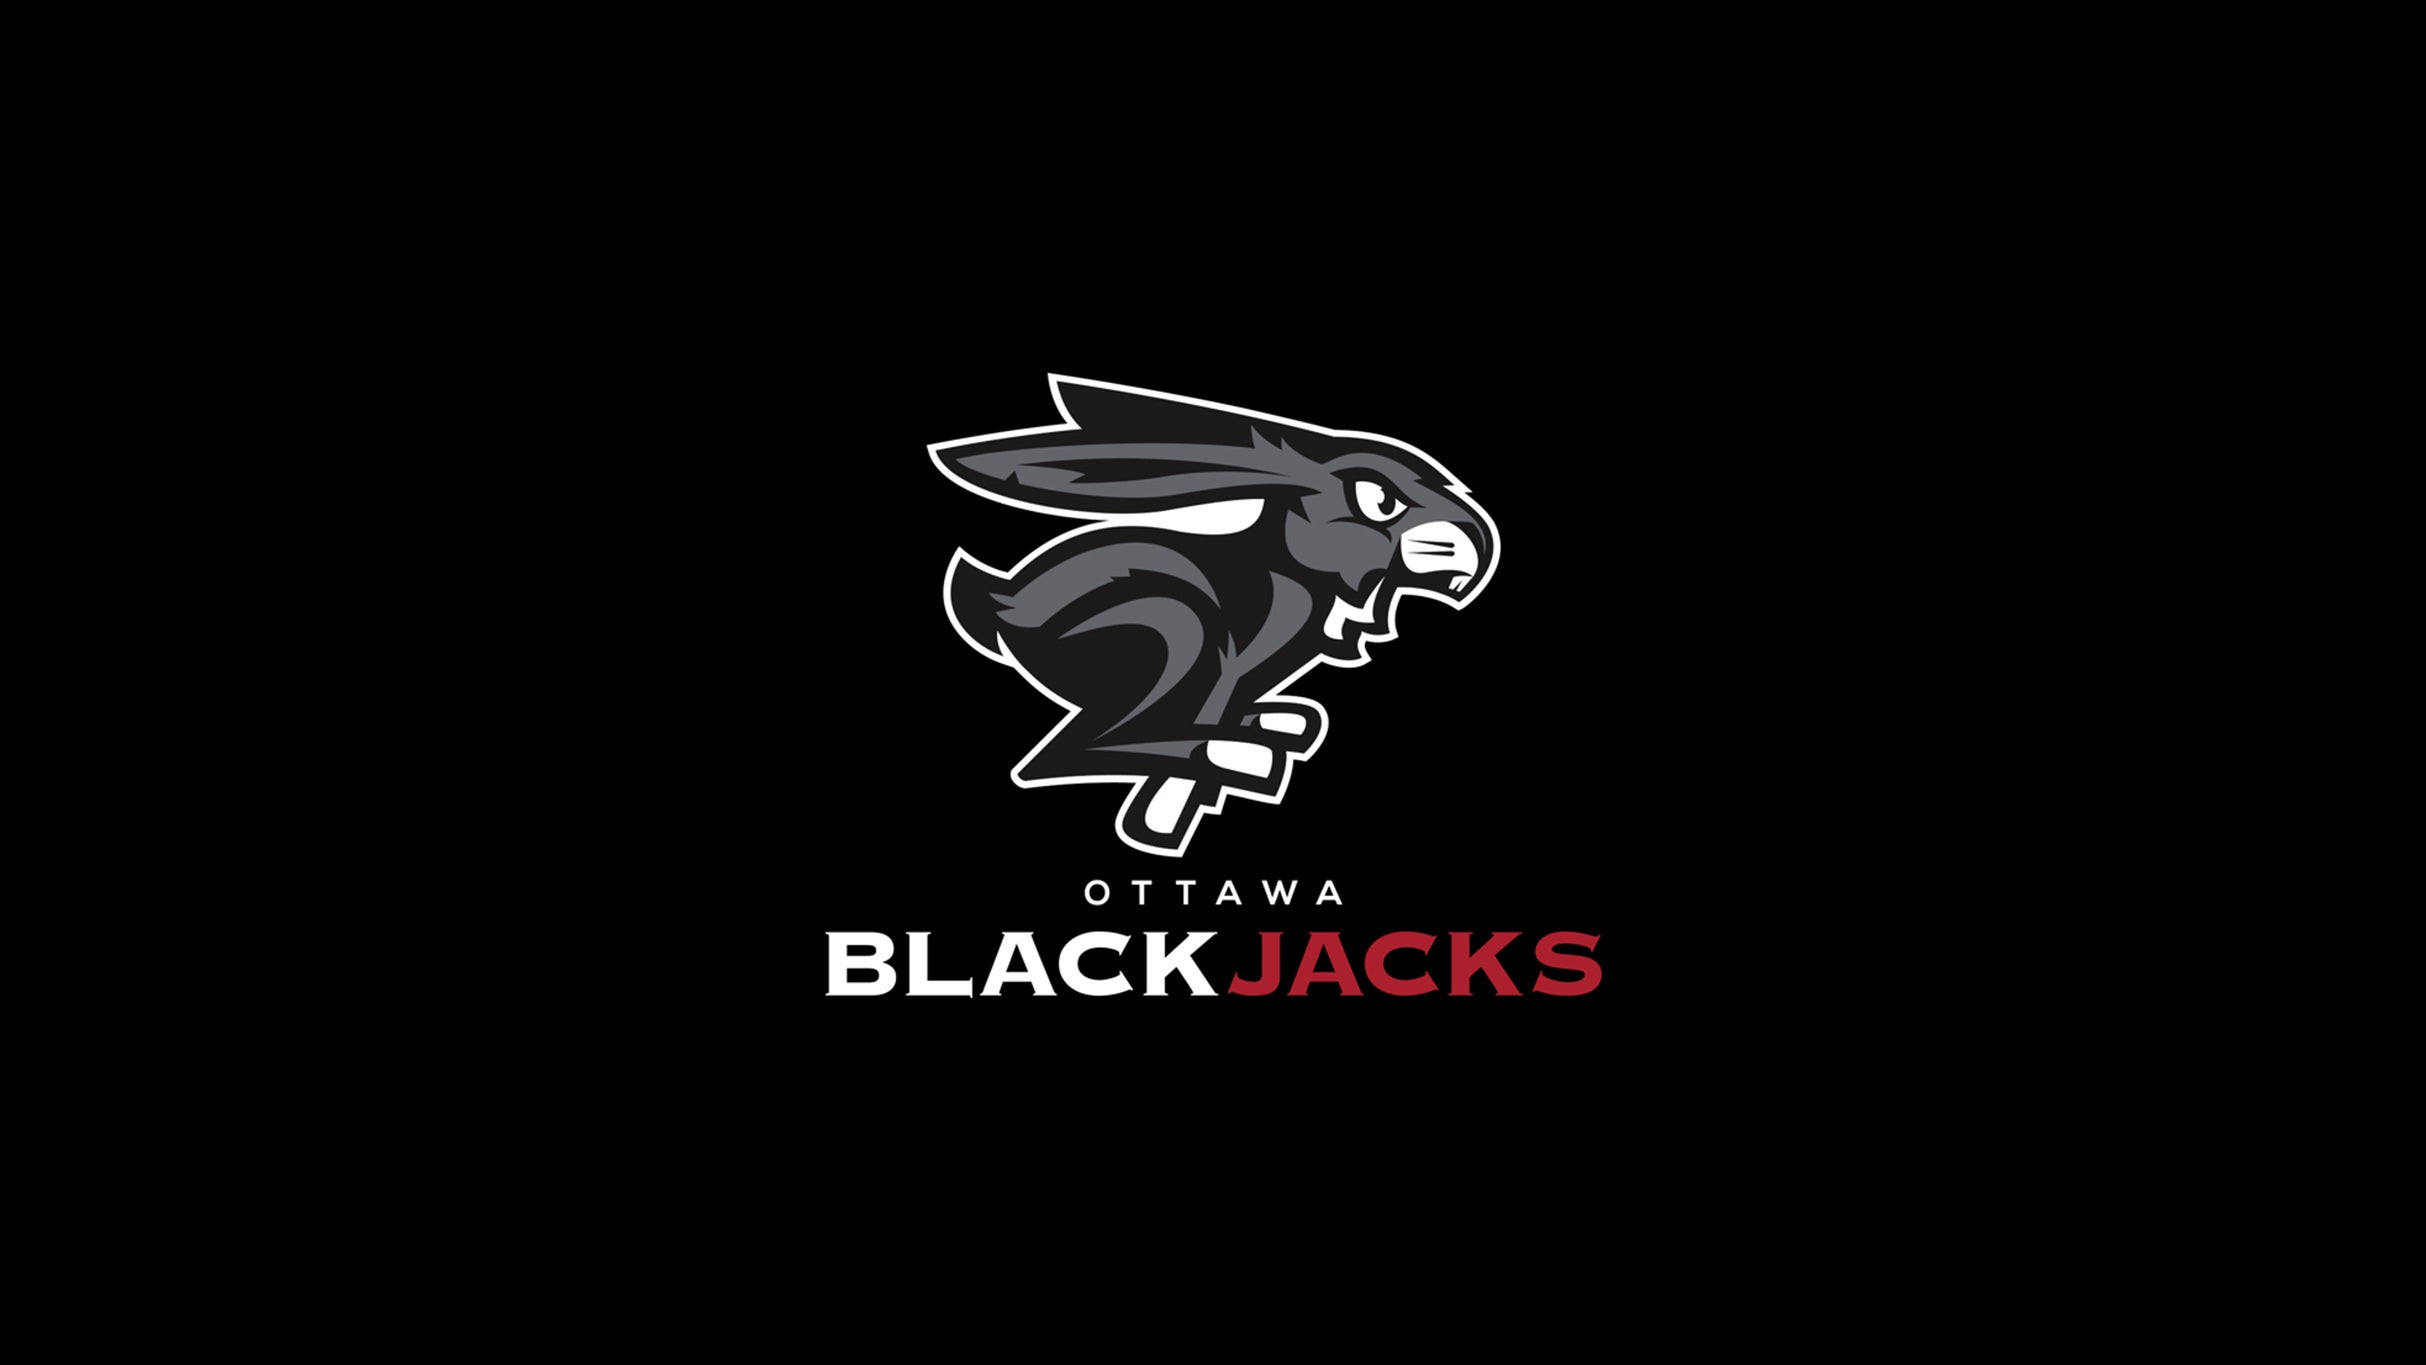 Ottawa BlackJacks vs. Niagara River Lions presale password